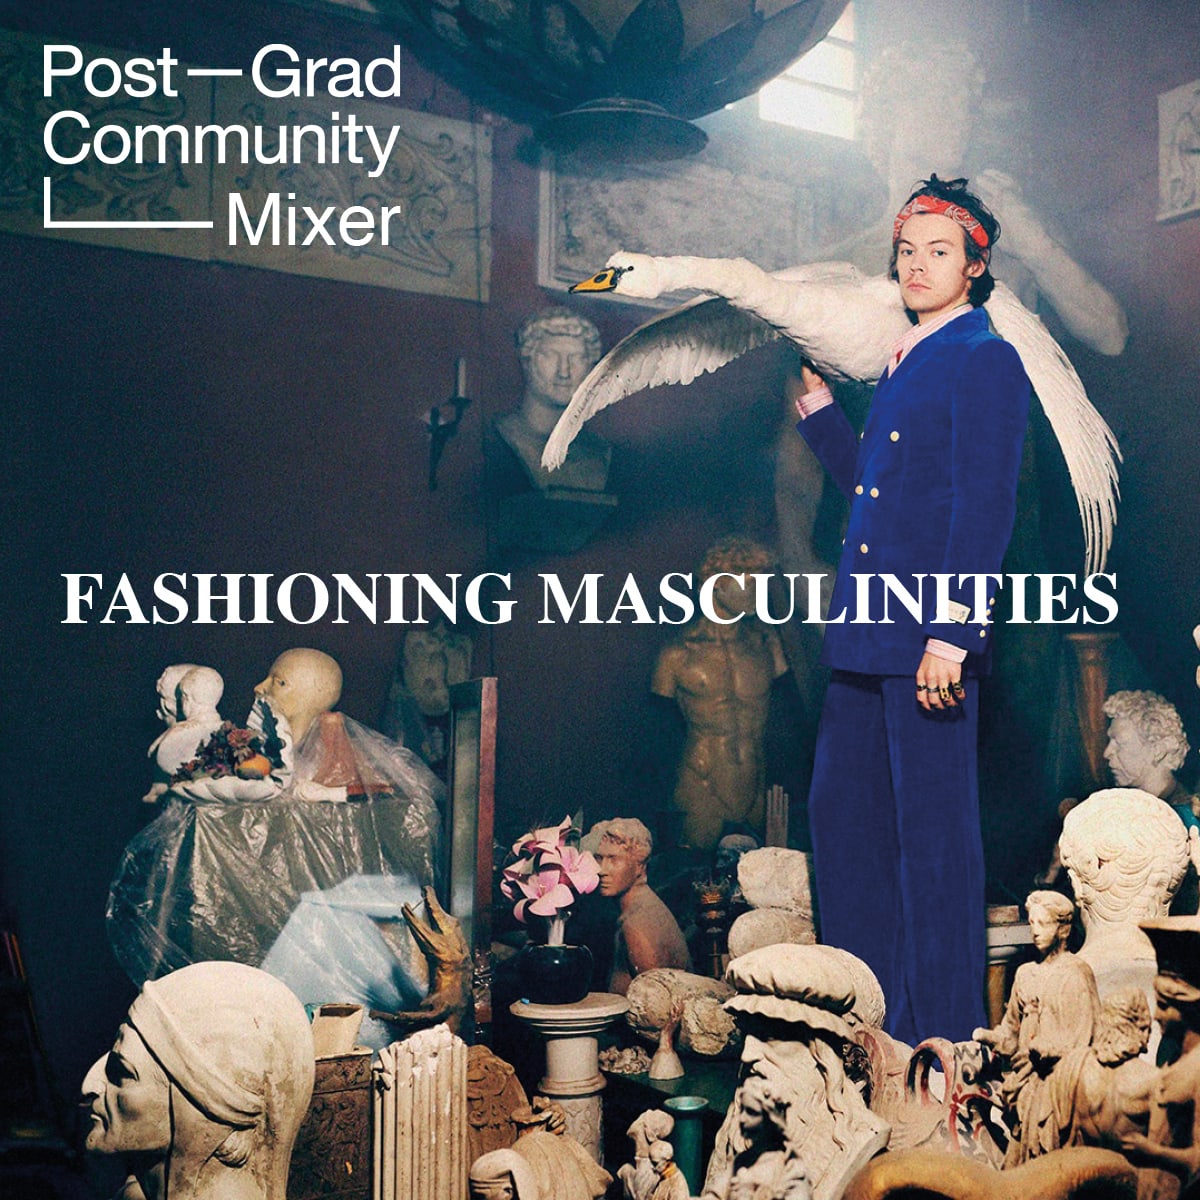 Post-Grad Mixer: Fashioning Masculinities at the V&A